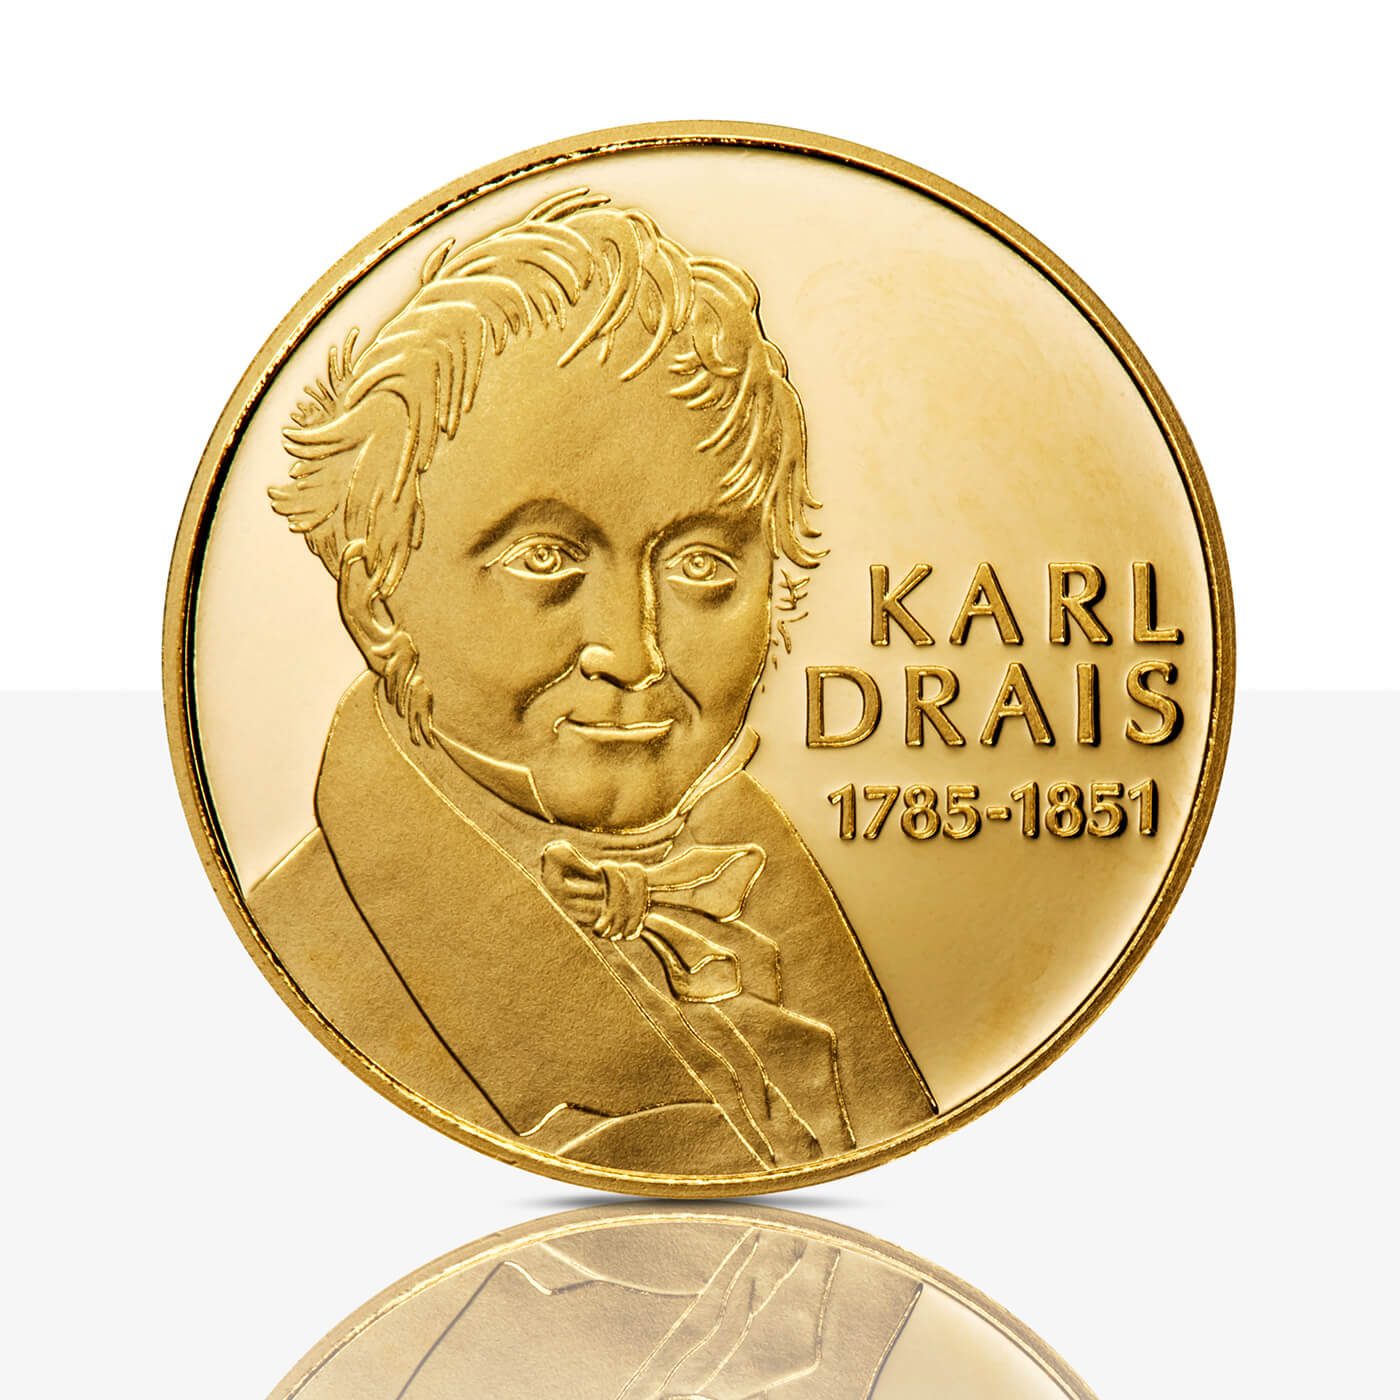 art medal Drais gold front side